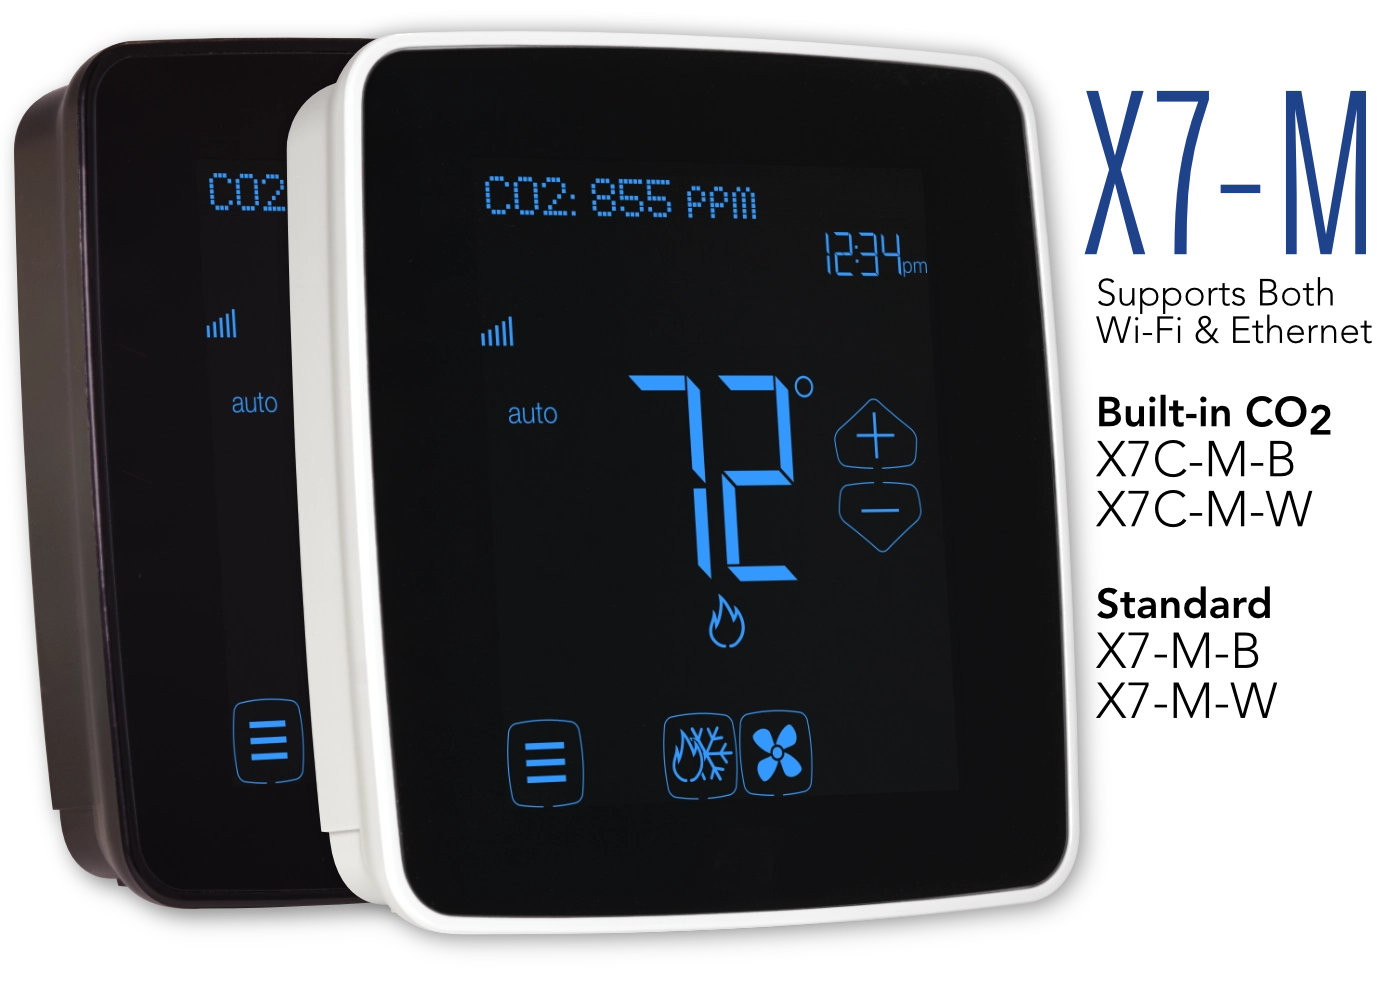 NetX X7-M Thermostats